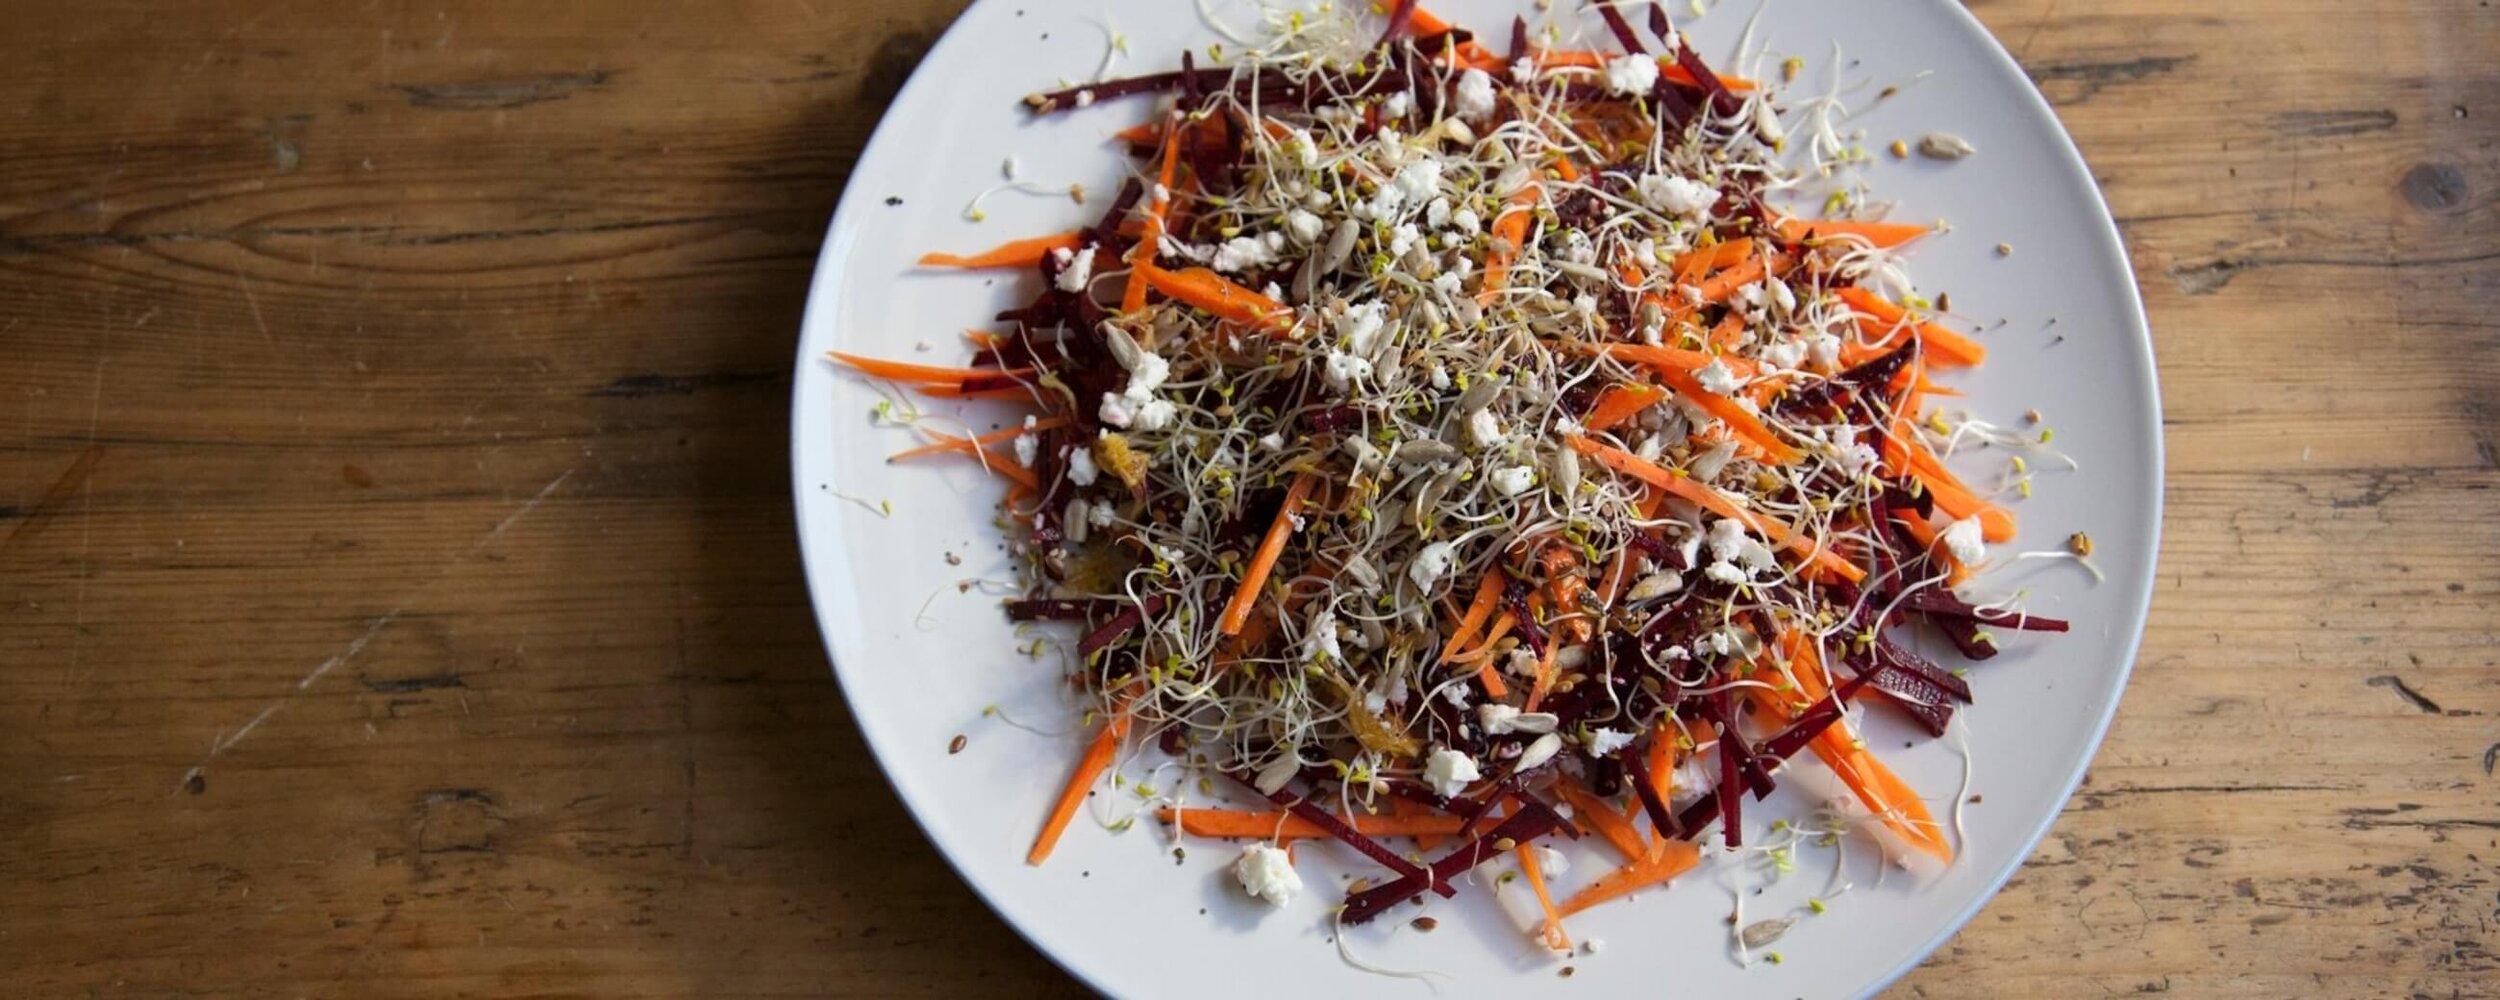 Beetroot Carrot and Alfalfa Salad